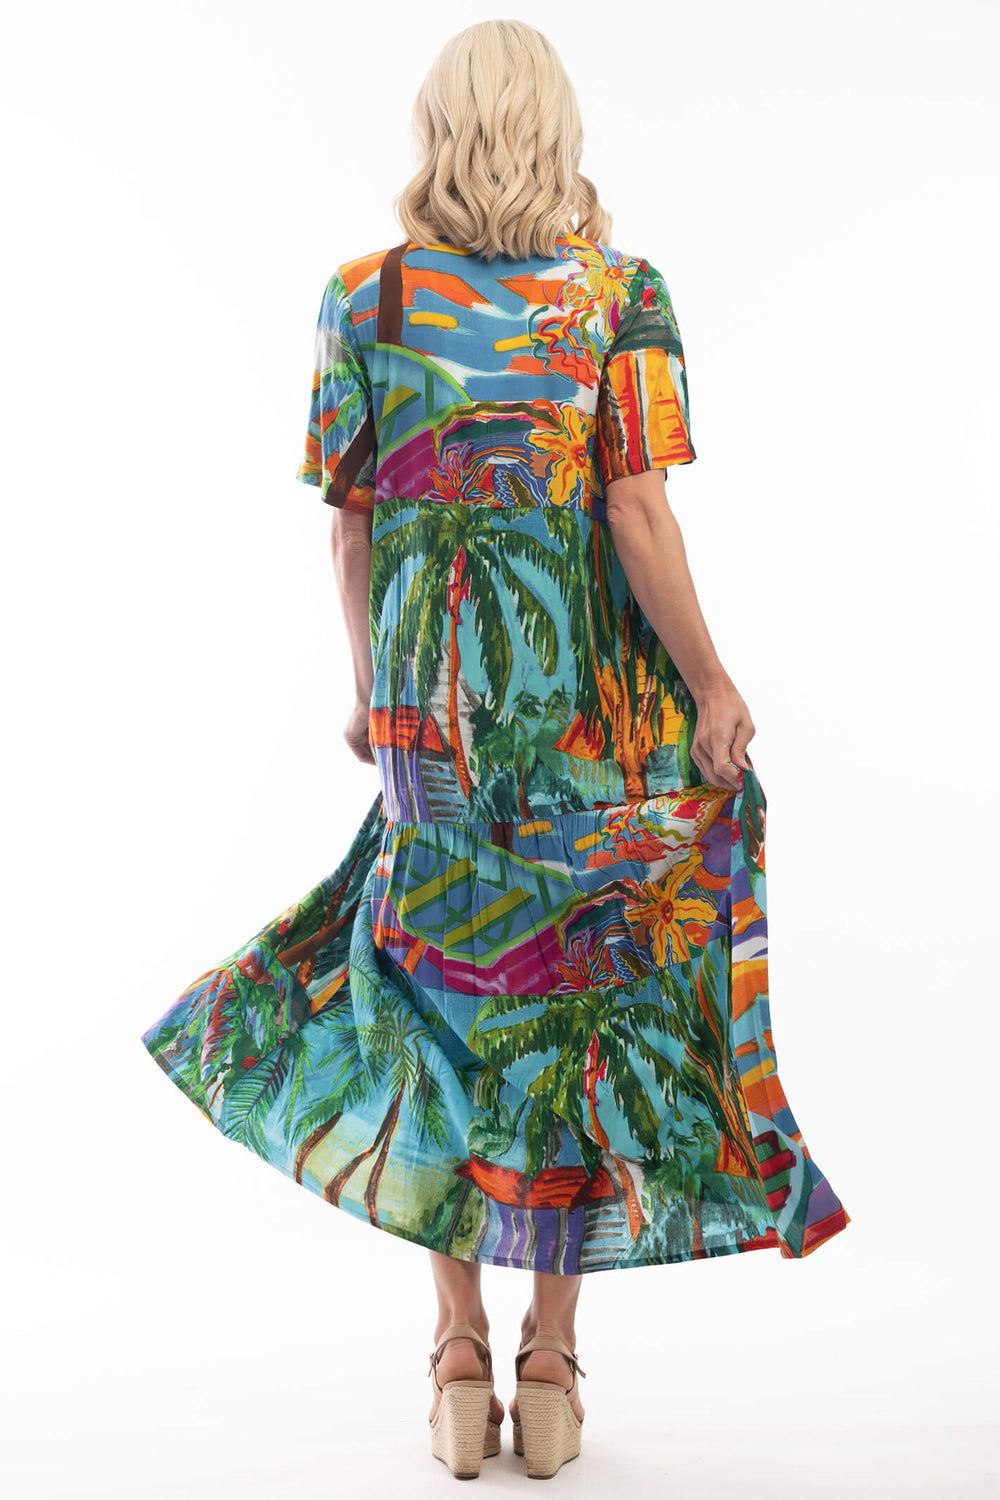 Orientique 6163 Green Penglipuran Peak Print Dress - Experience Boutique